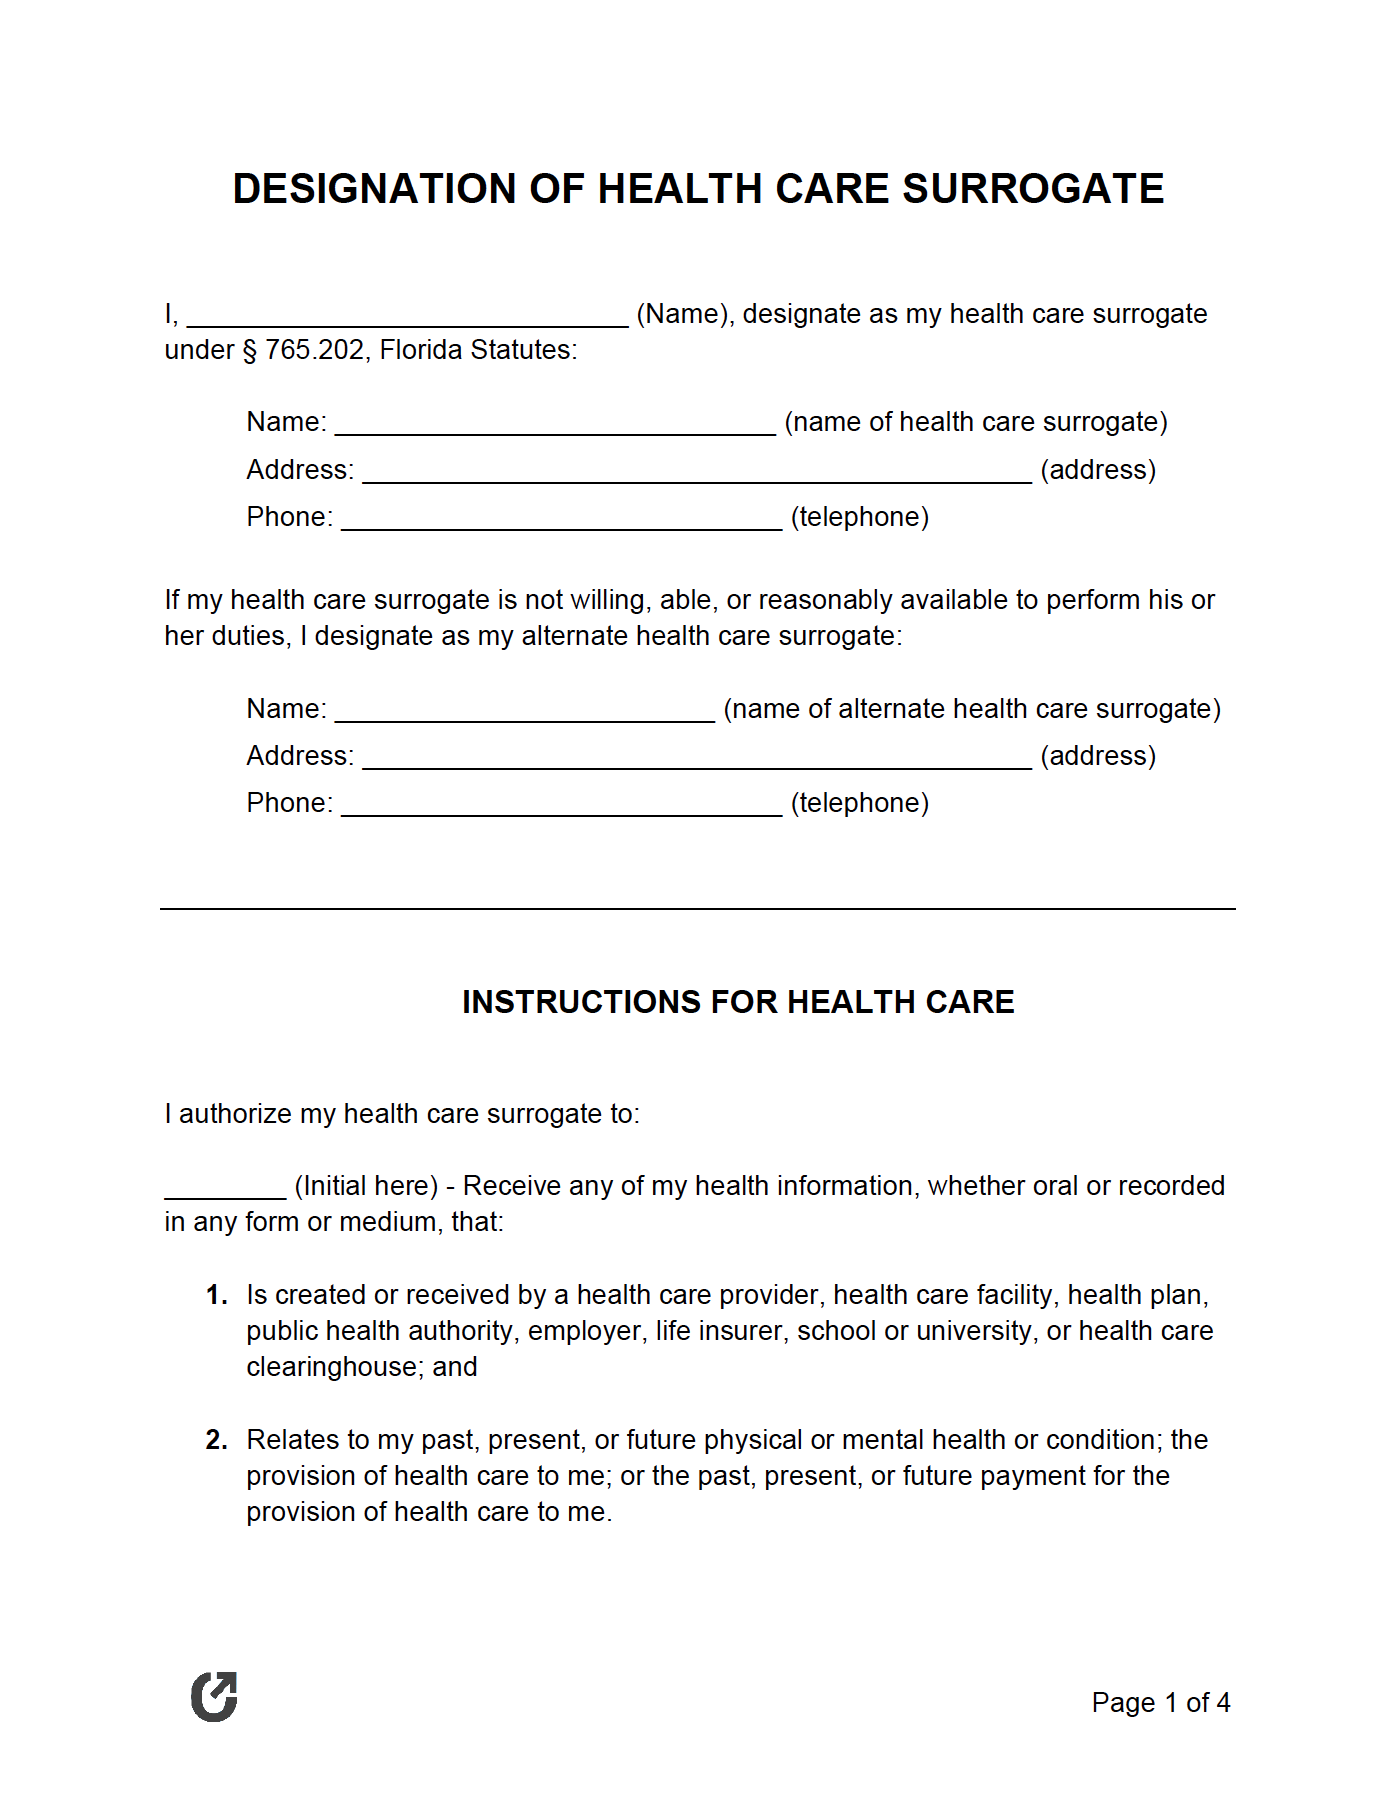 Free Florida Designation of Health Care Surrogate Form PDF WORD RTF